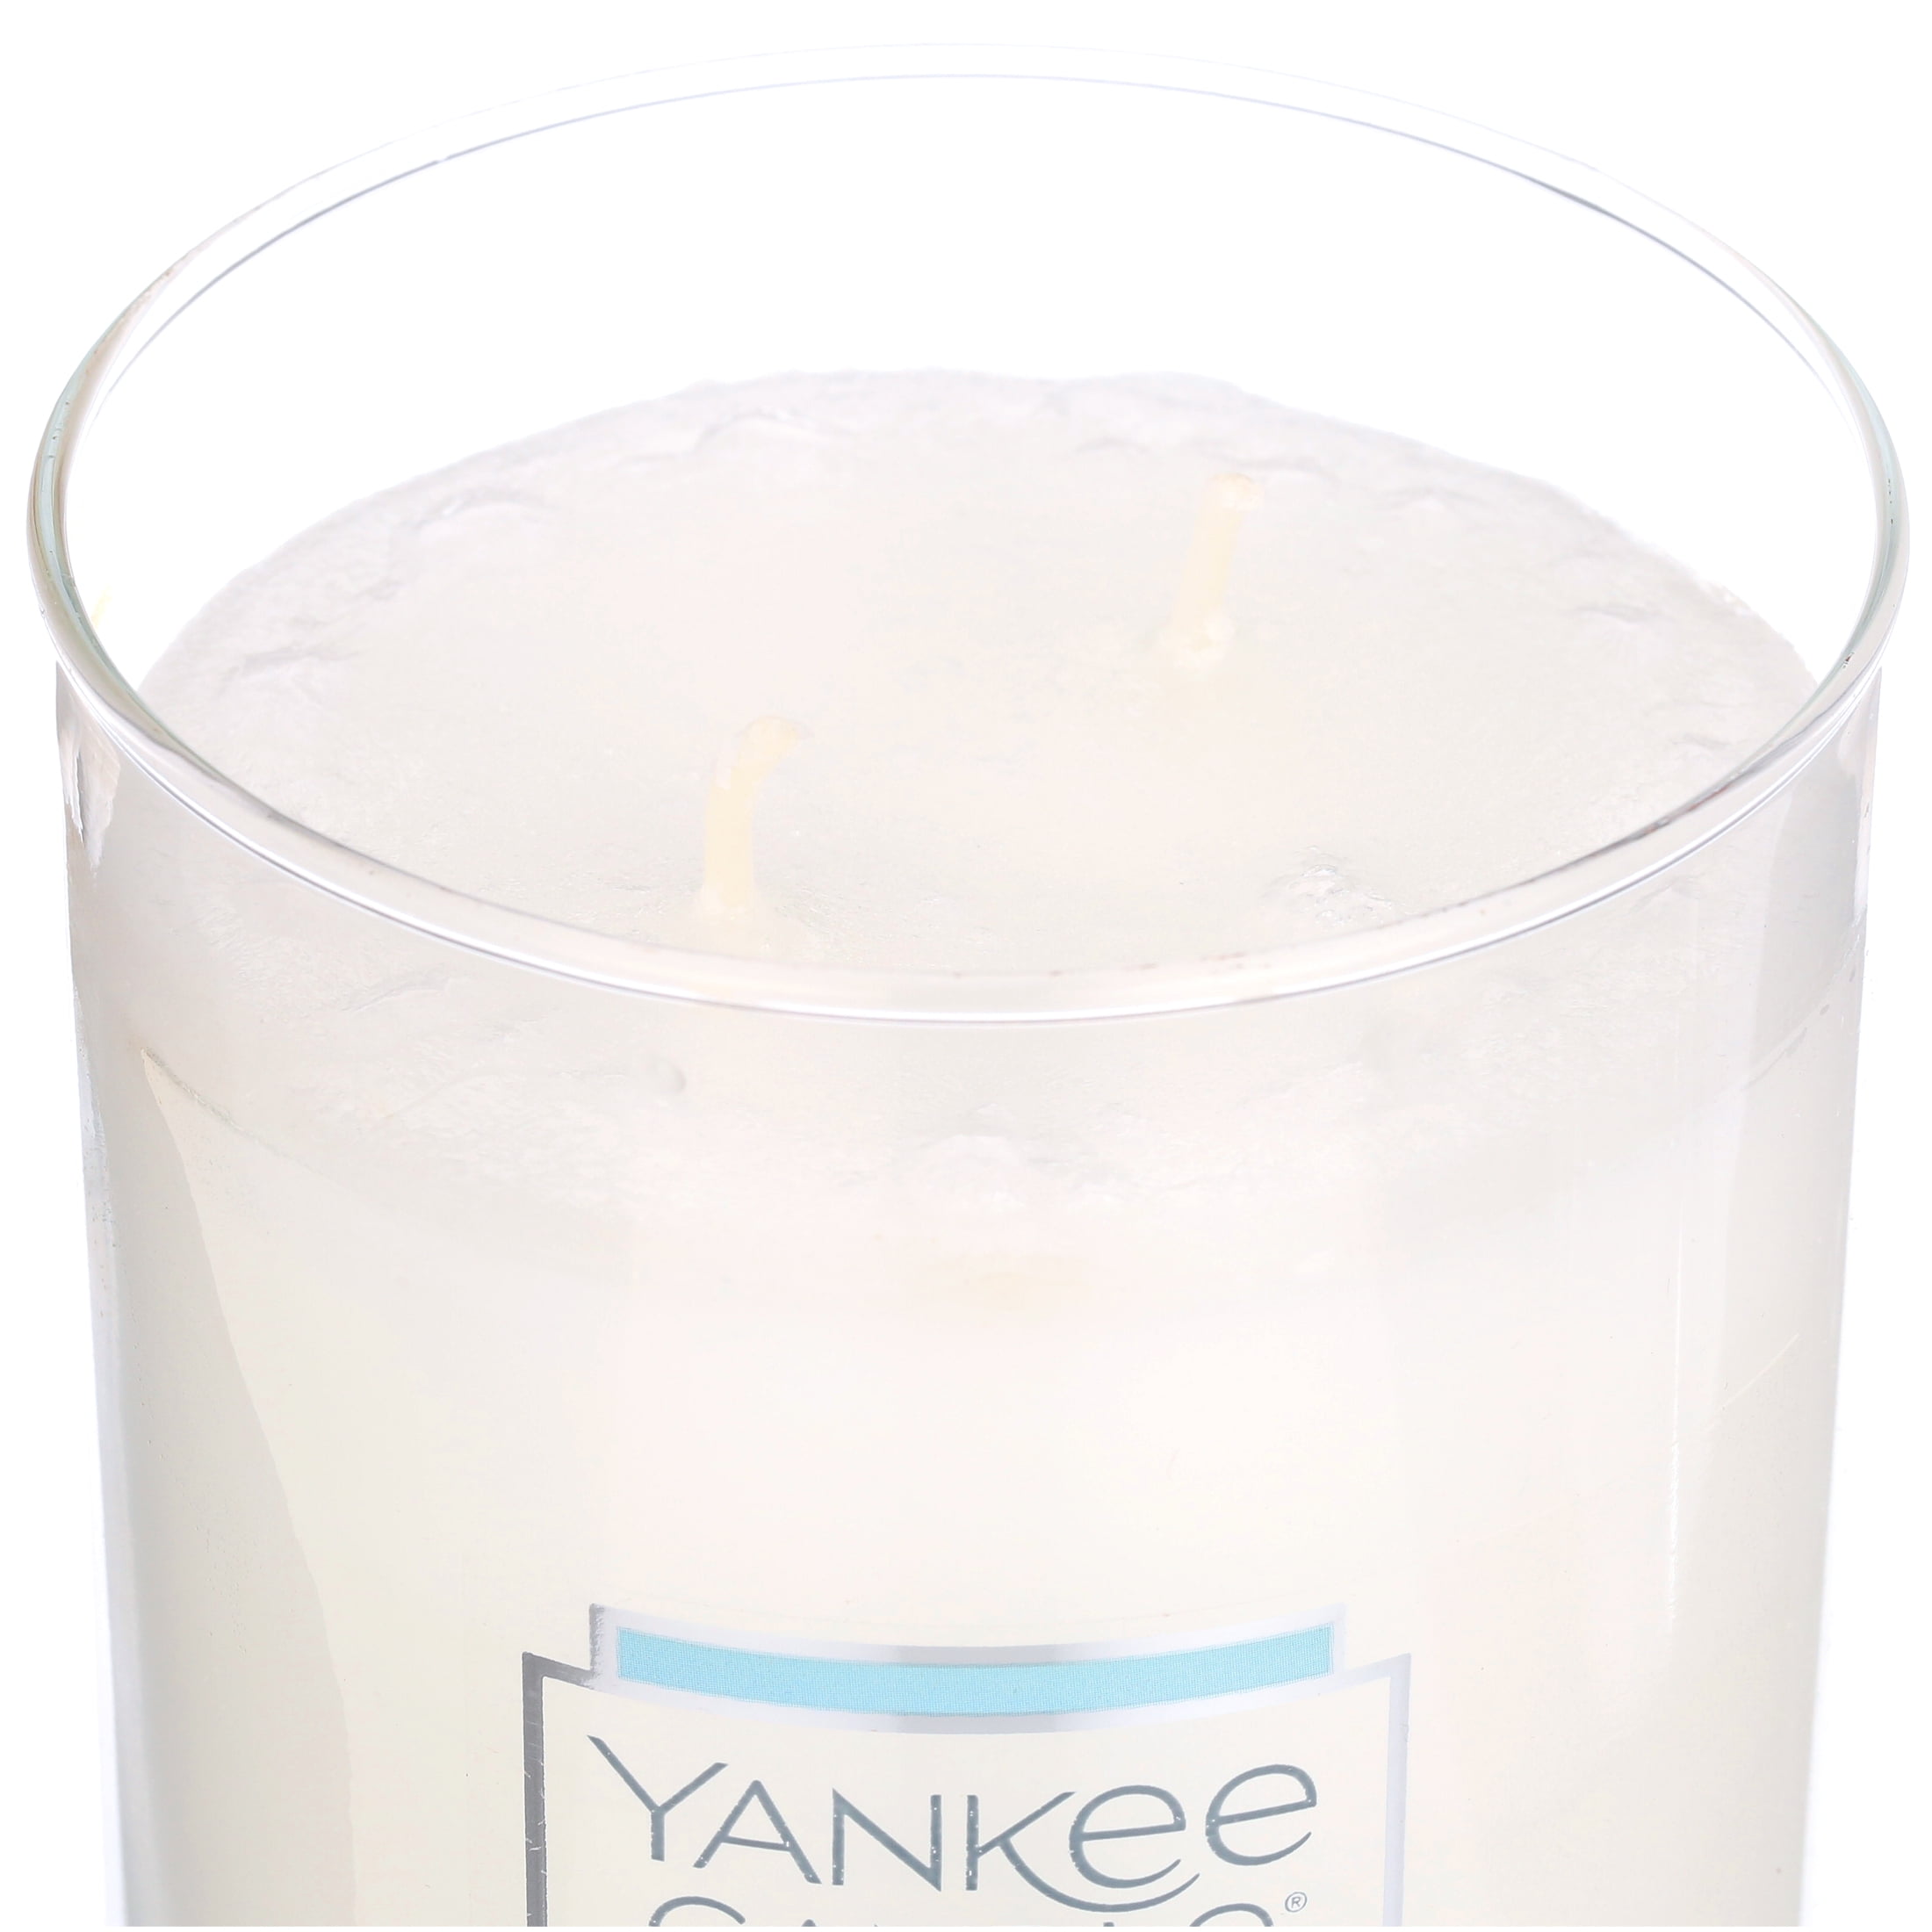 Yankee Candle® Lemon Lavender Fragranced Wax Melts, 6 pk - Kroger